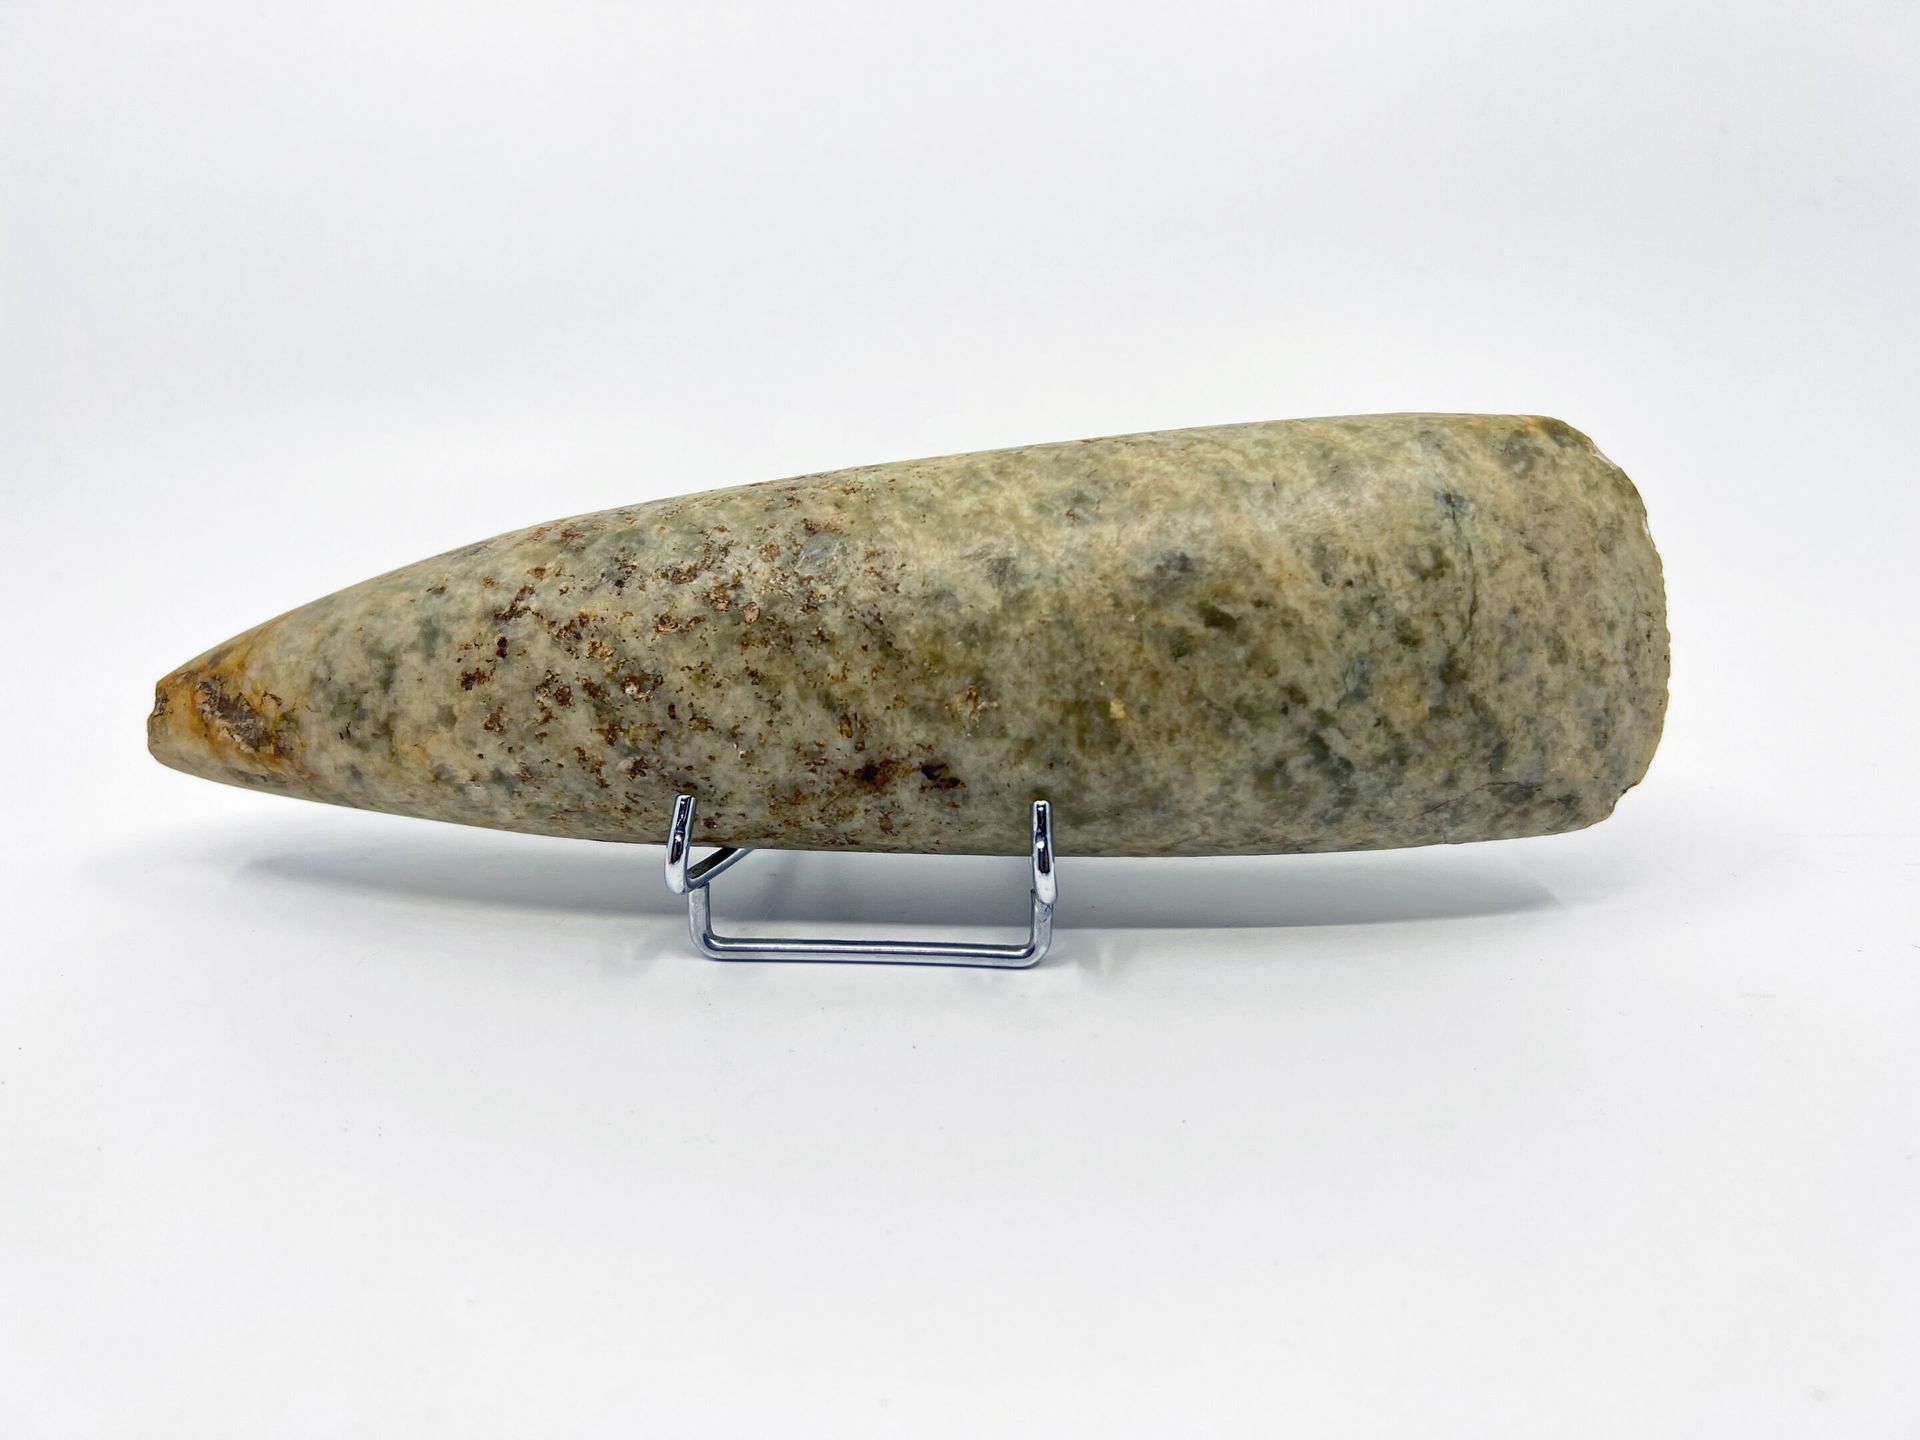 Null 重要的抛光斧头
带绿色的纤维石。
法国, 新石器时代
长：22.5厘米。
标签显示 "Port en Bessin"。

---
在CAEN通过预约领&hellip;